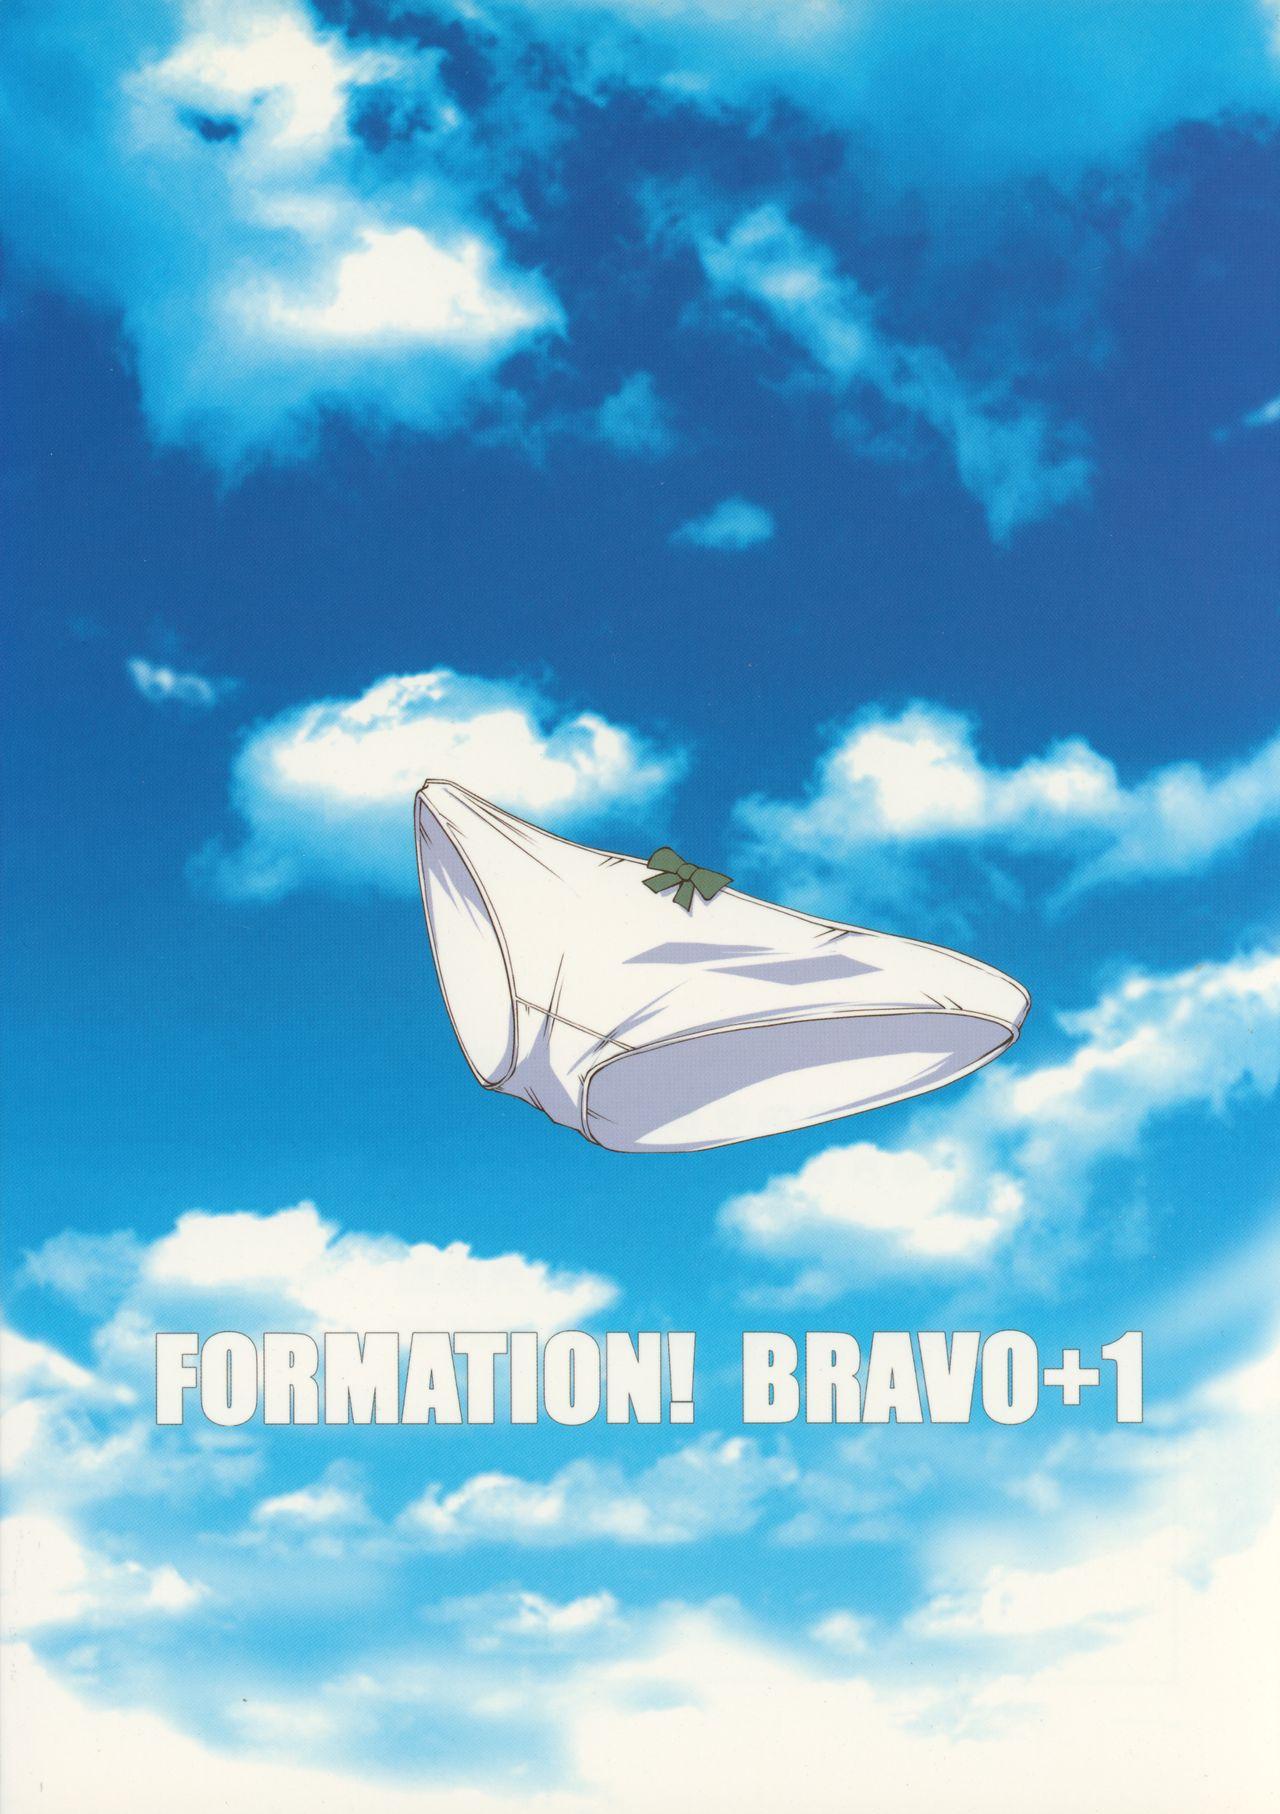 FORMATION! BRAVO+1 25